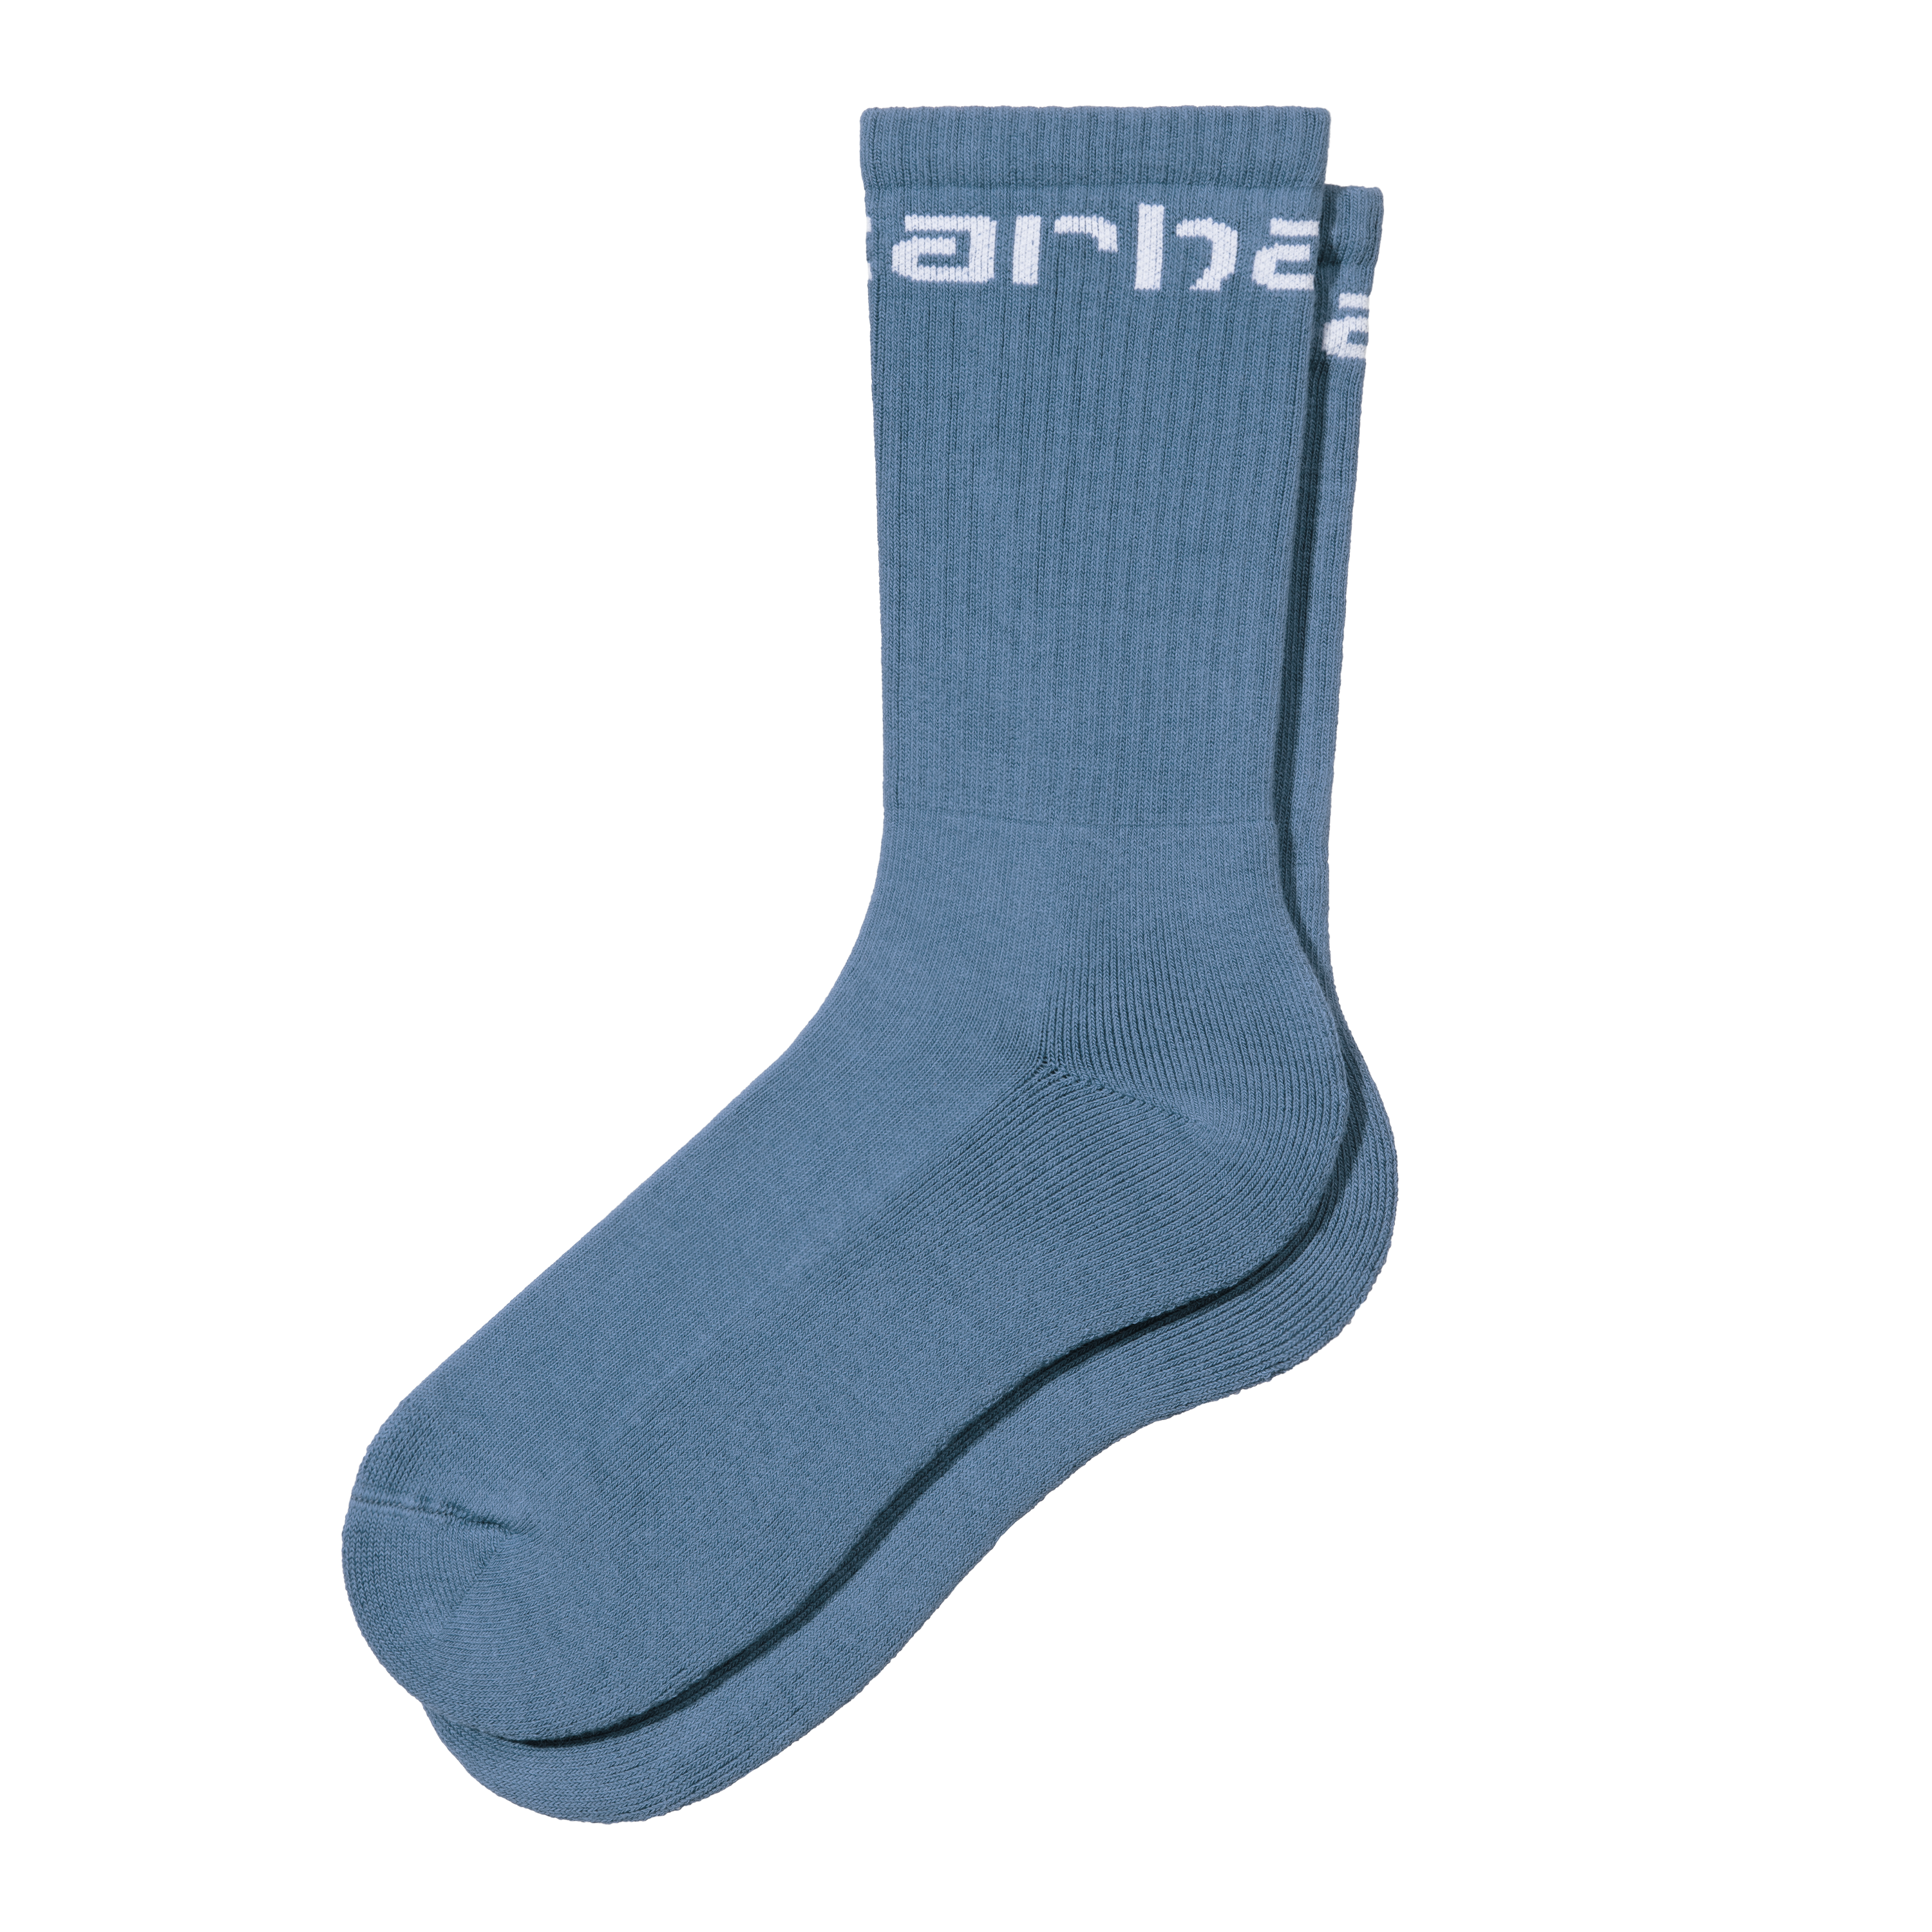 Carhartt WIP Carhartt Socks in Blau